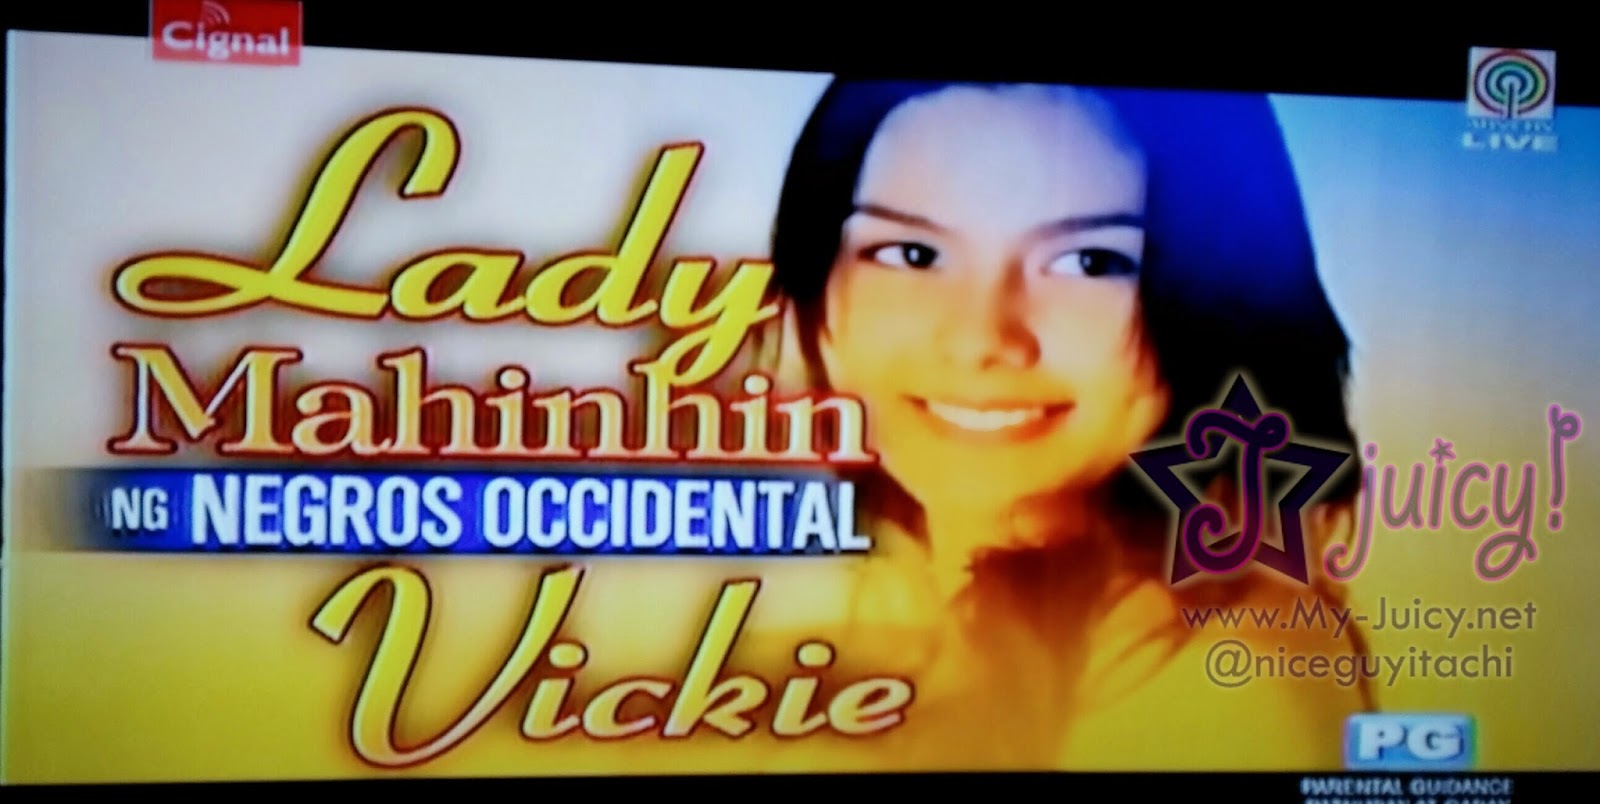 Vickie "Lady Mahinhin ng Negros Occidental" PBB All In Housemate